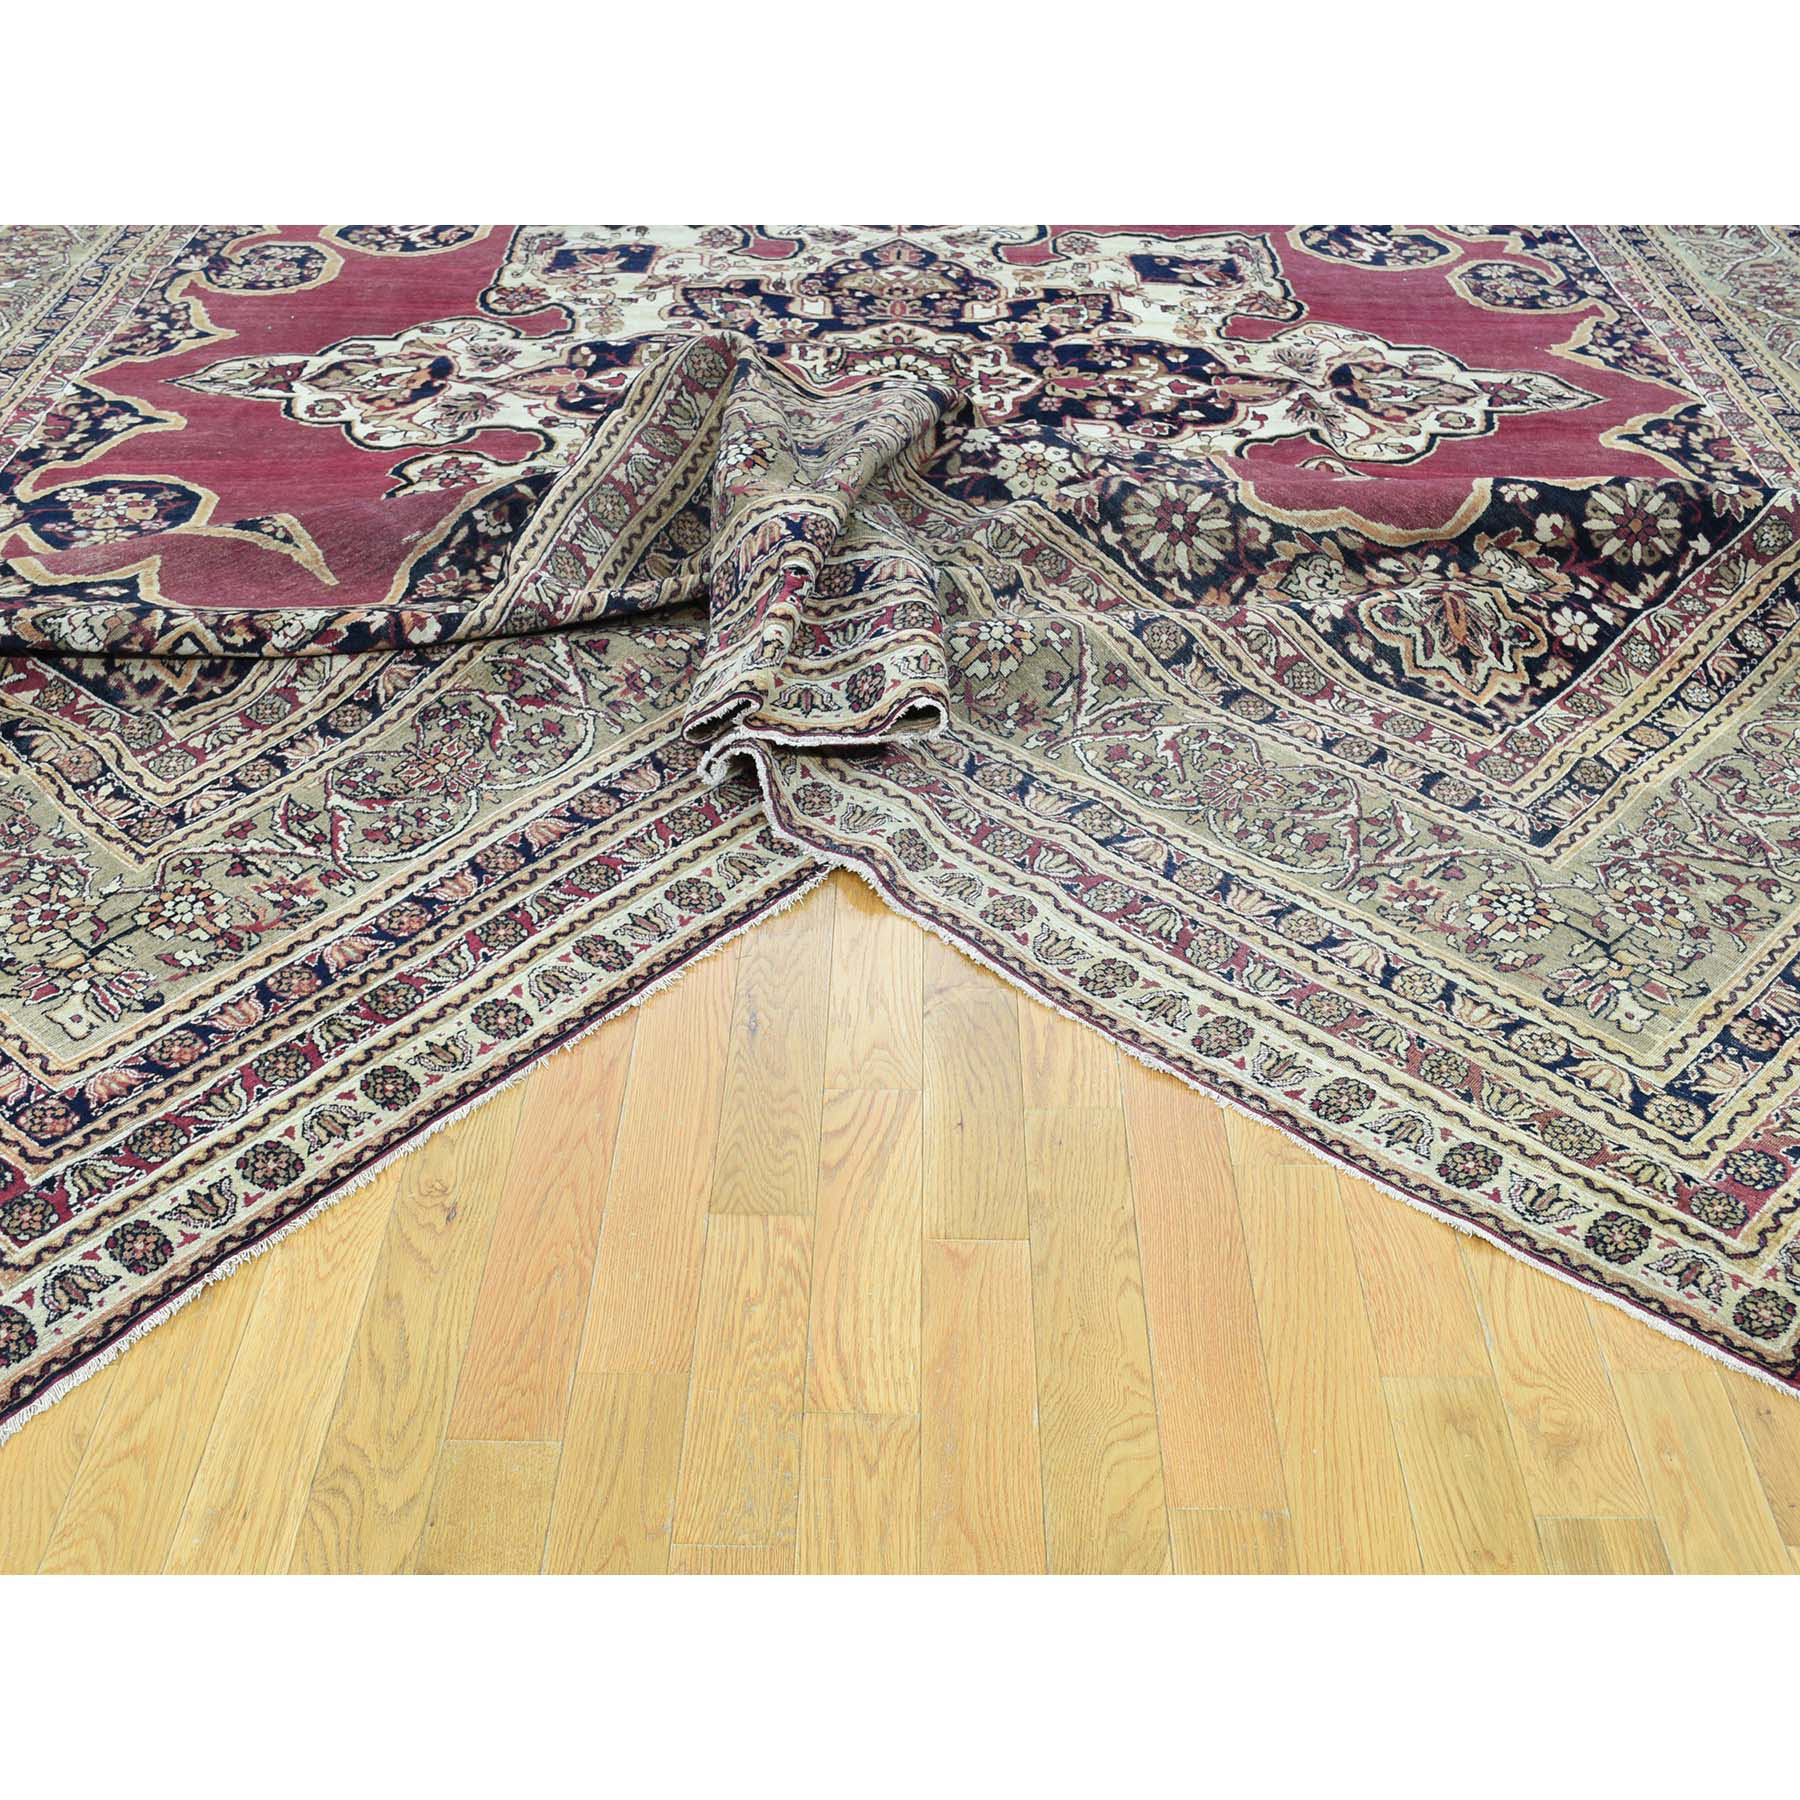 11'9"x15'7" Antique Persian Lavar Kerman Good Cond Oversize Oriental Rug 